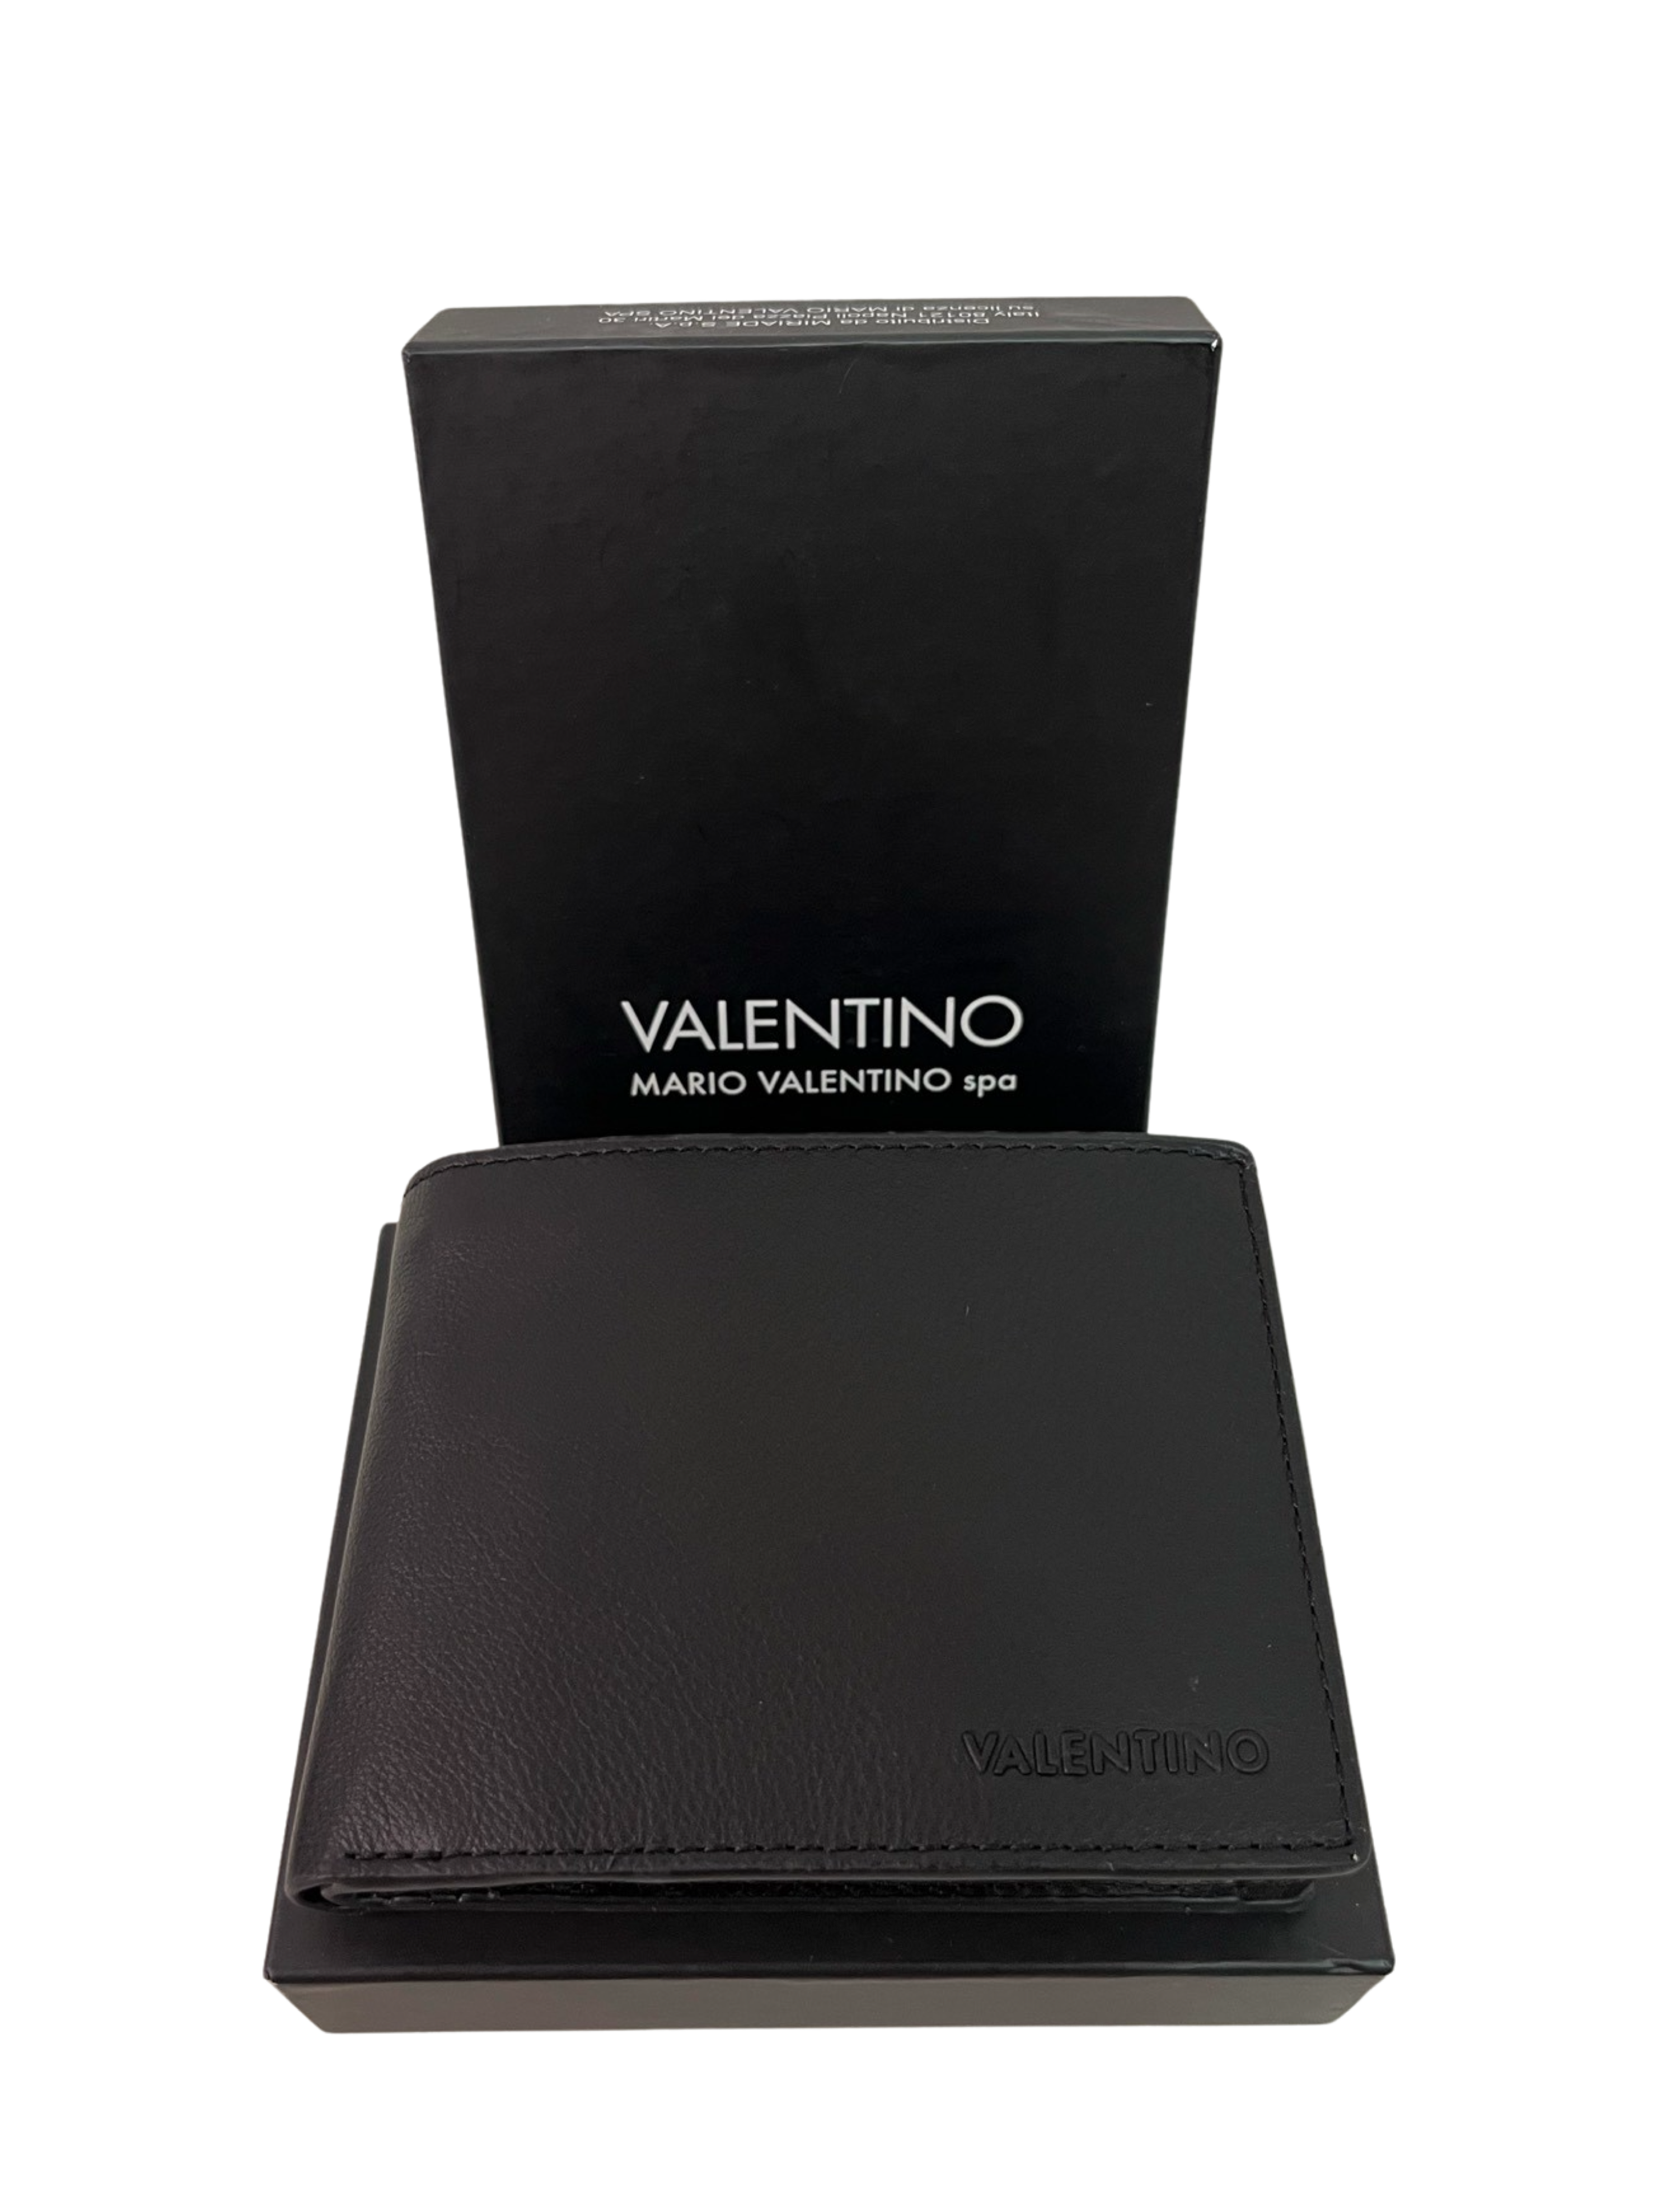 Valentino wallet